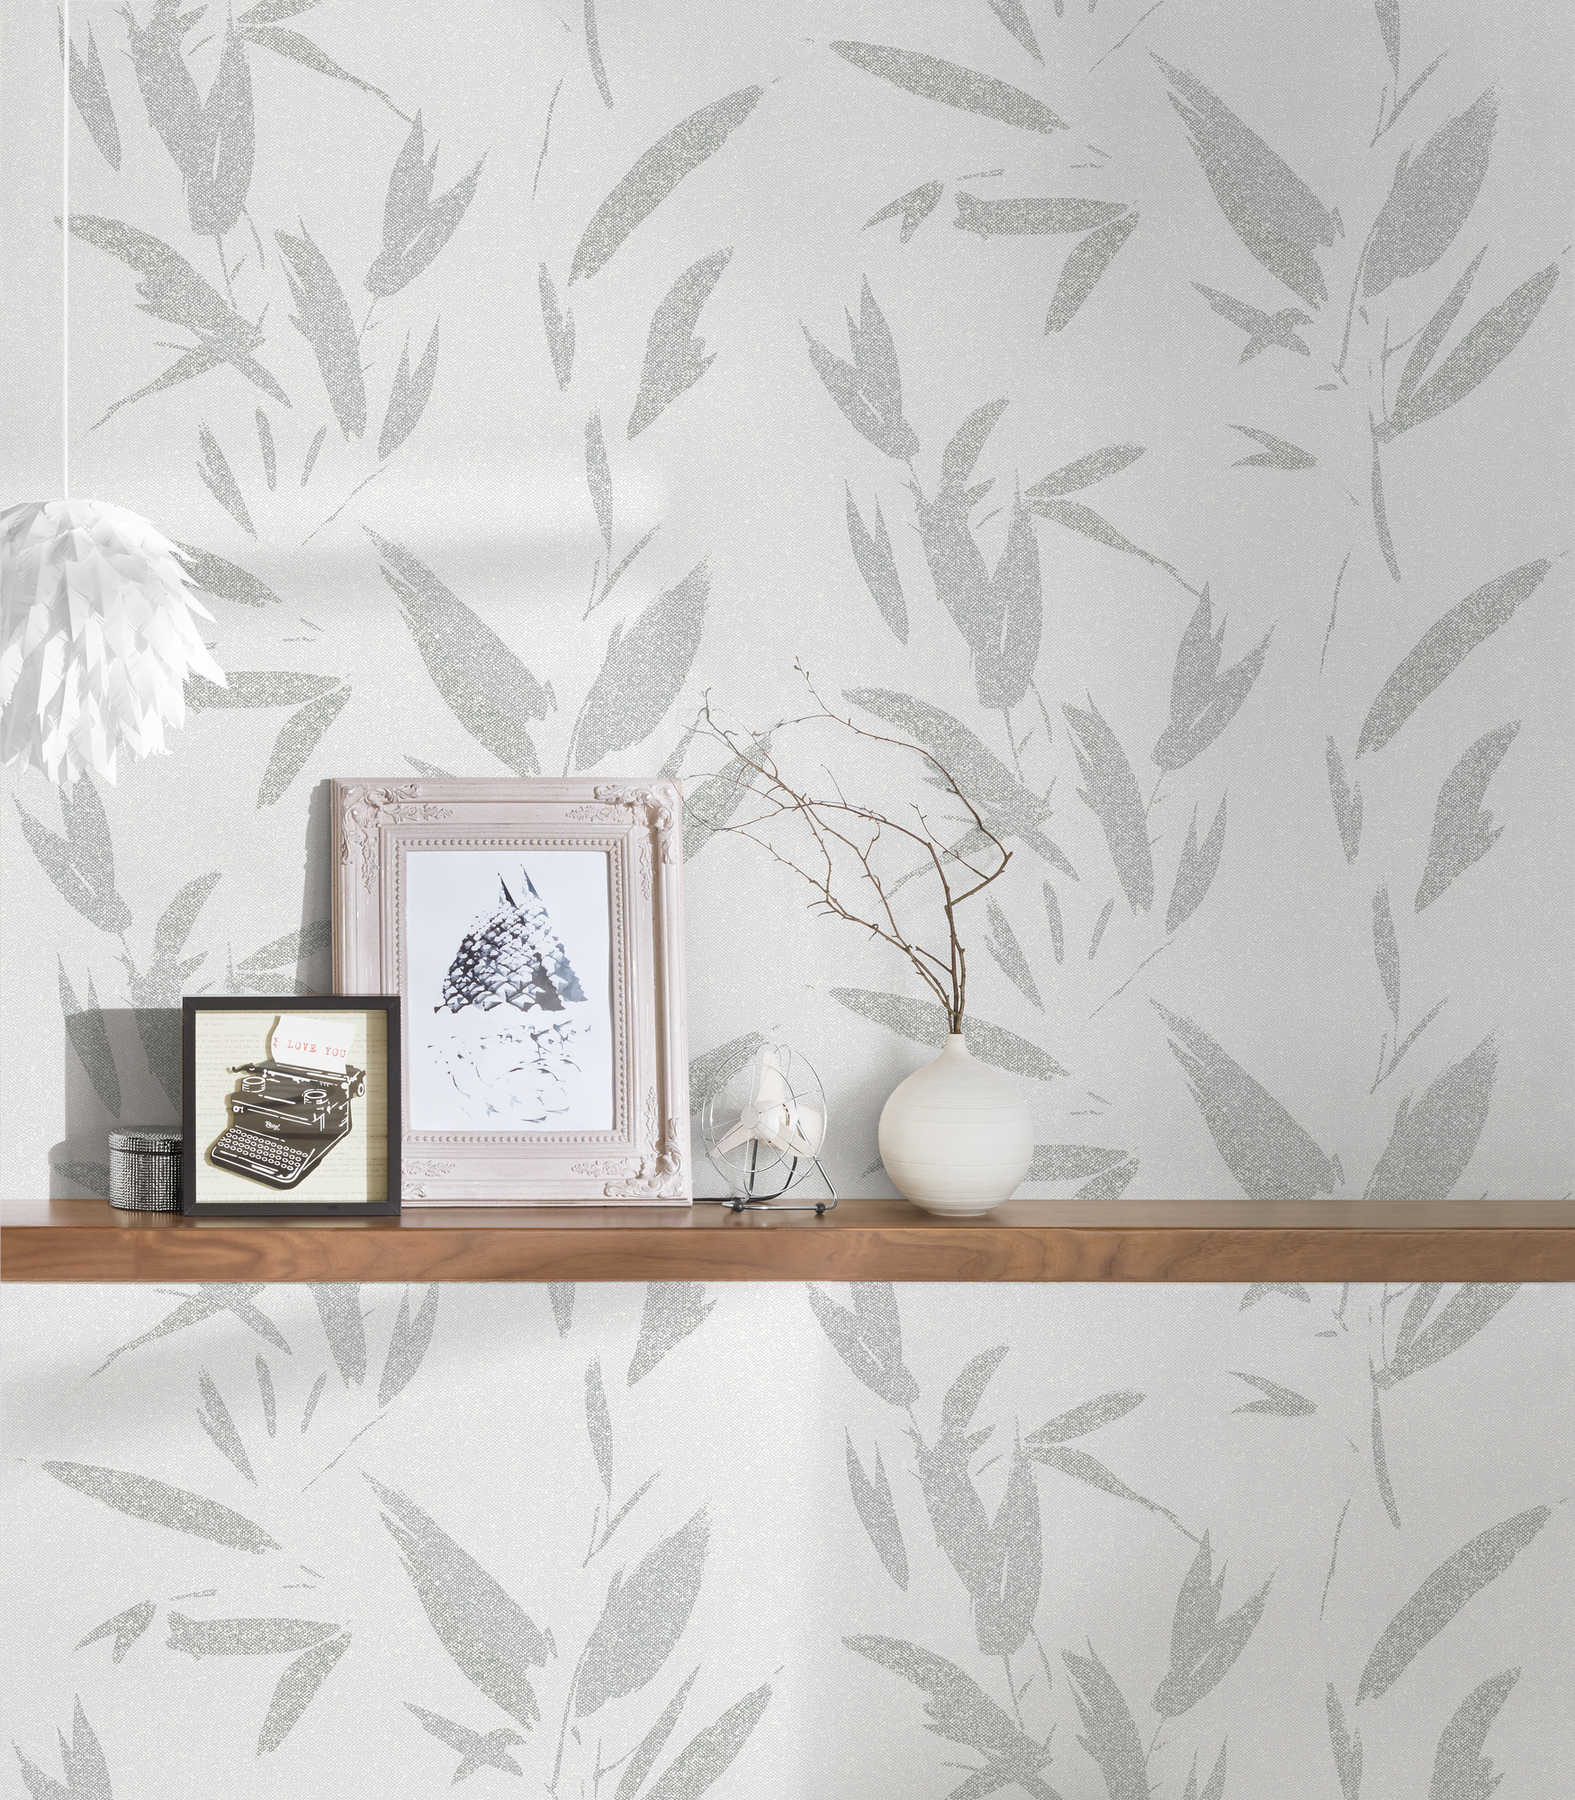             Non-woven wallpaper leaf motif abstract, textile look - white, cream, grey
        